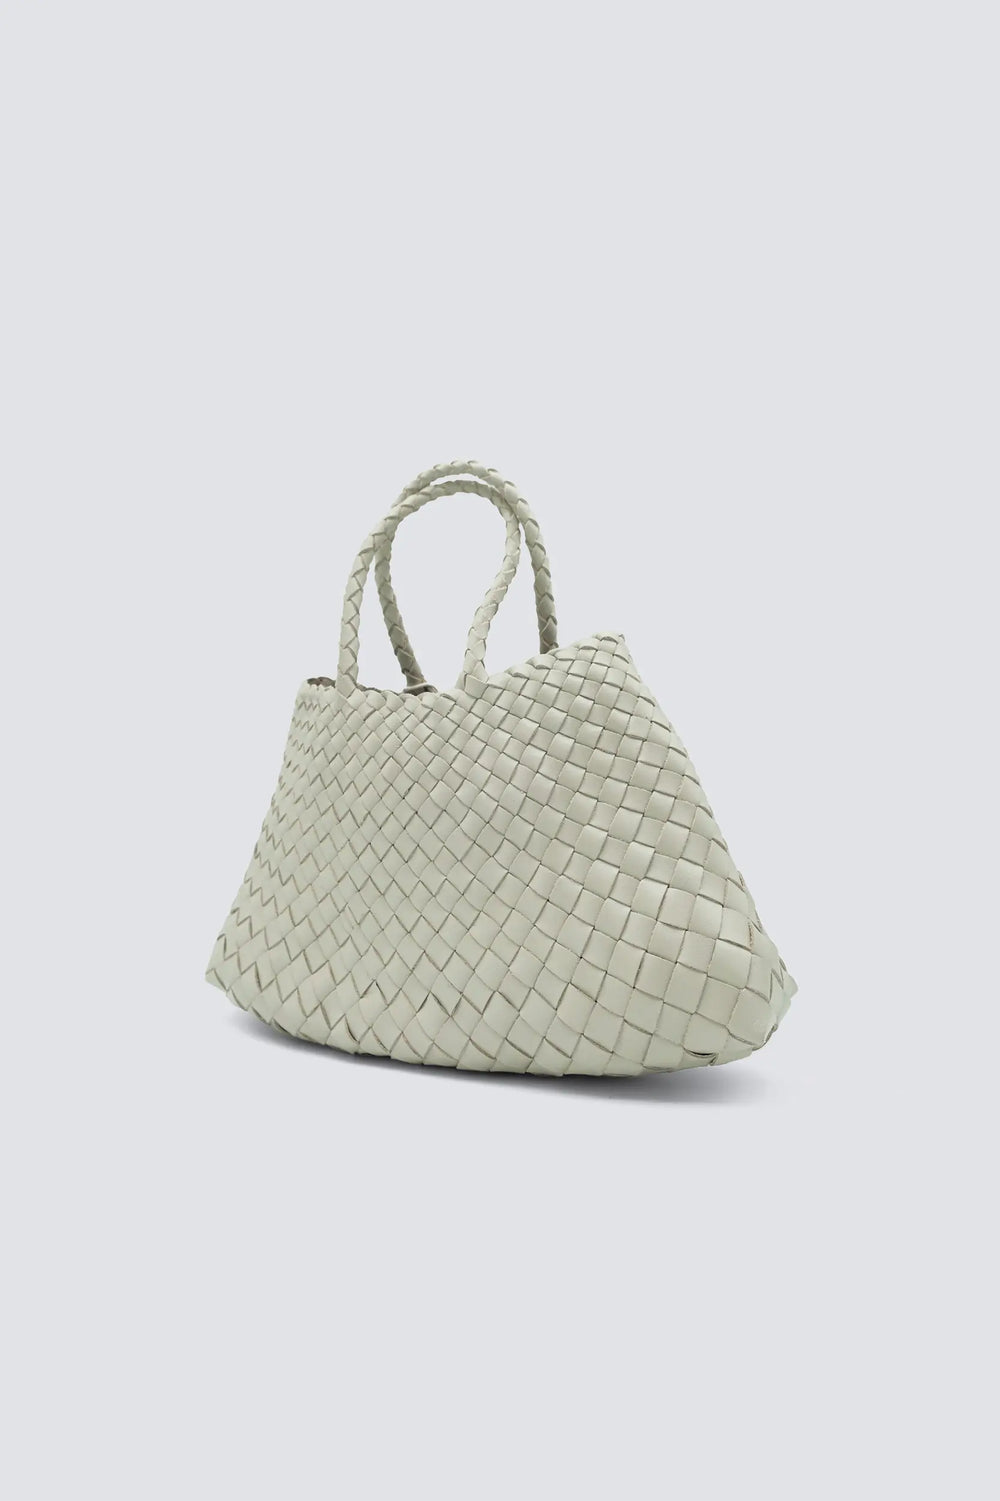 Dragon Diffusion - Woven Leather Bag Handmade - Santa Croce Small Pearl